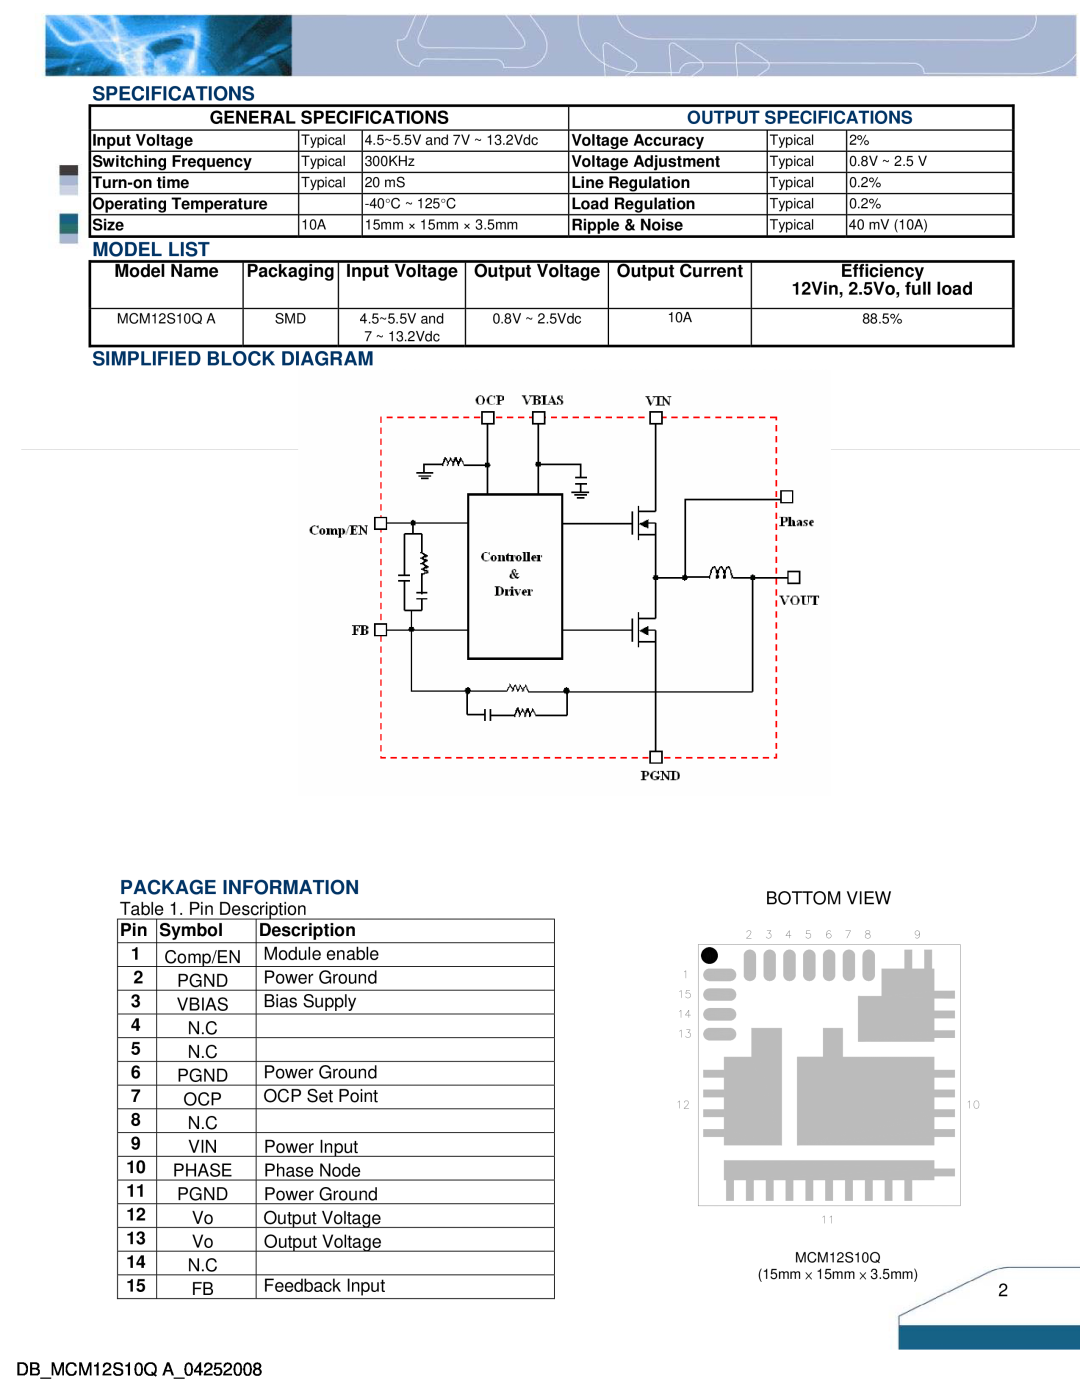 Delta Electronics 7V ~ 13.2V Specifications, Model List, Simplified Block Diagram, Package Information, Packaging, Symbol 